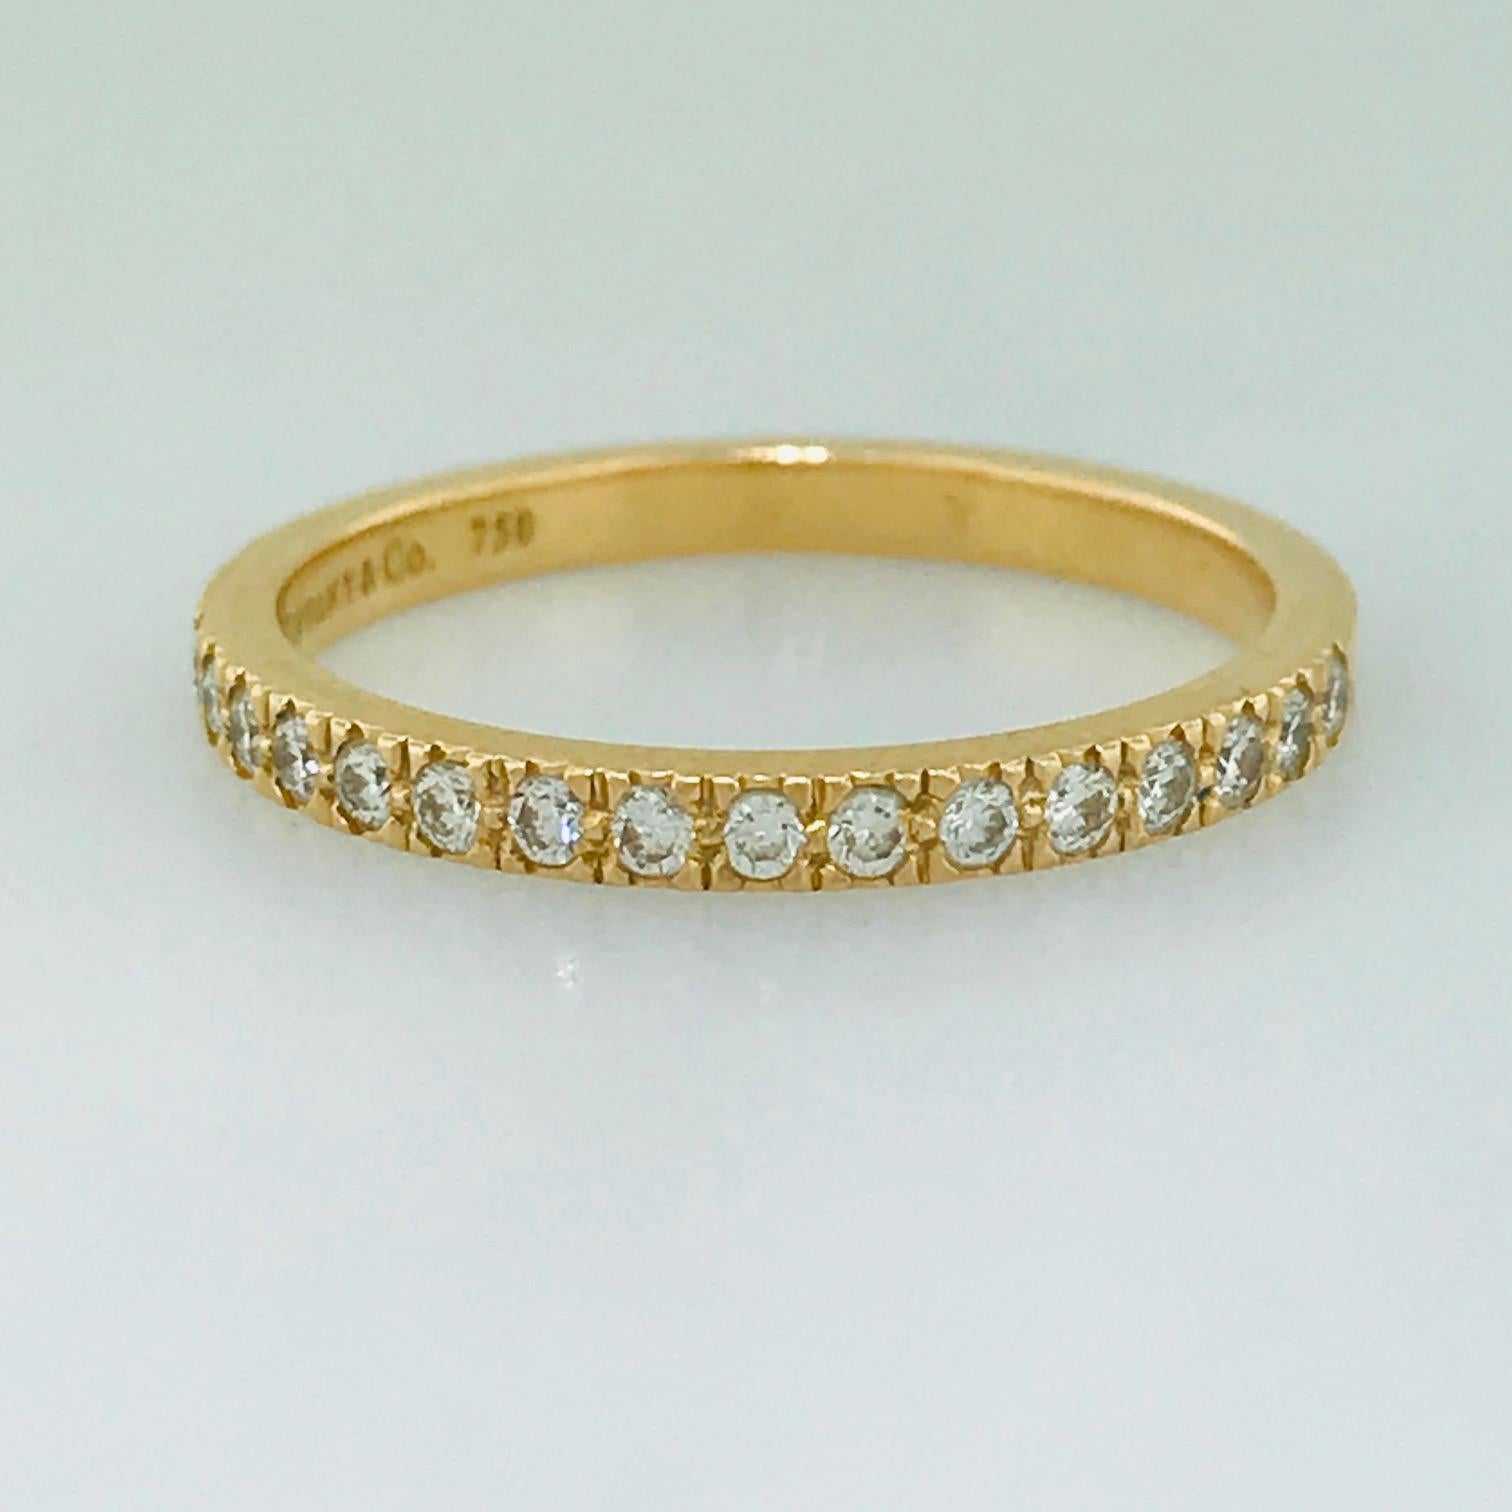 Tiffany Wedding Band 18k Rose Gold Tiffany & Co. Ring, .30 carat diamond weight 4